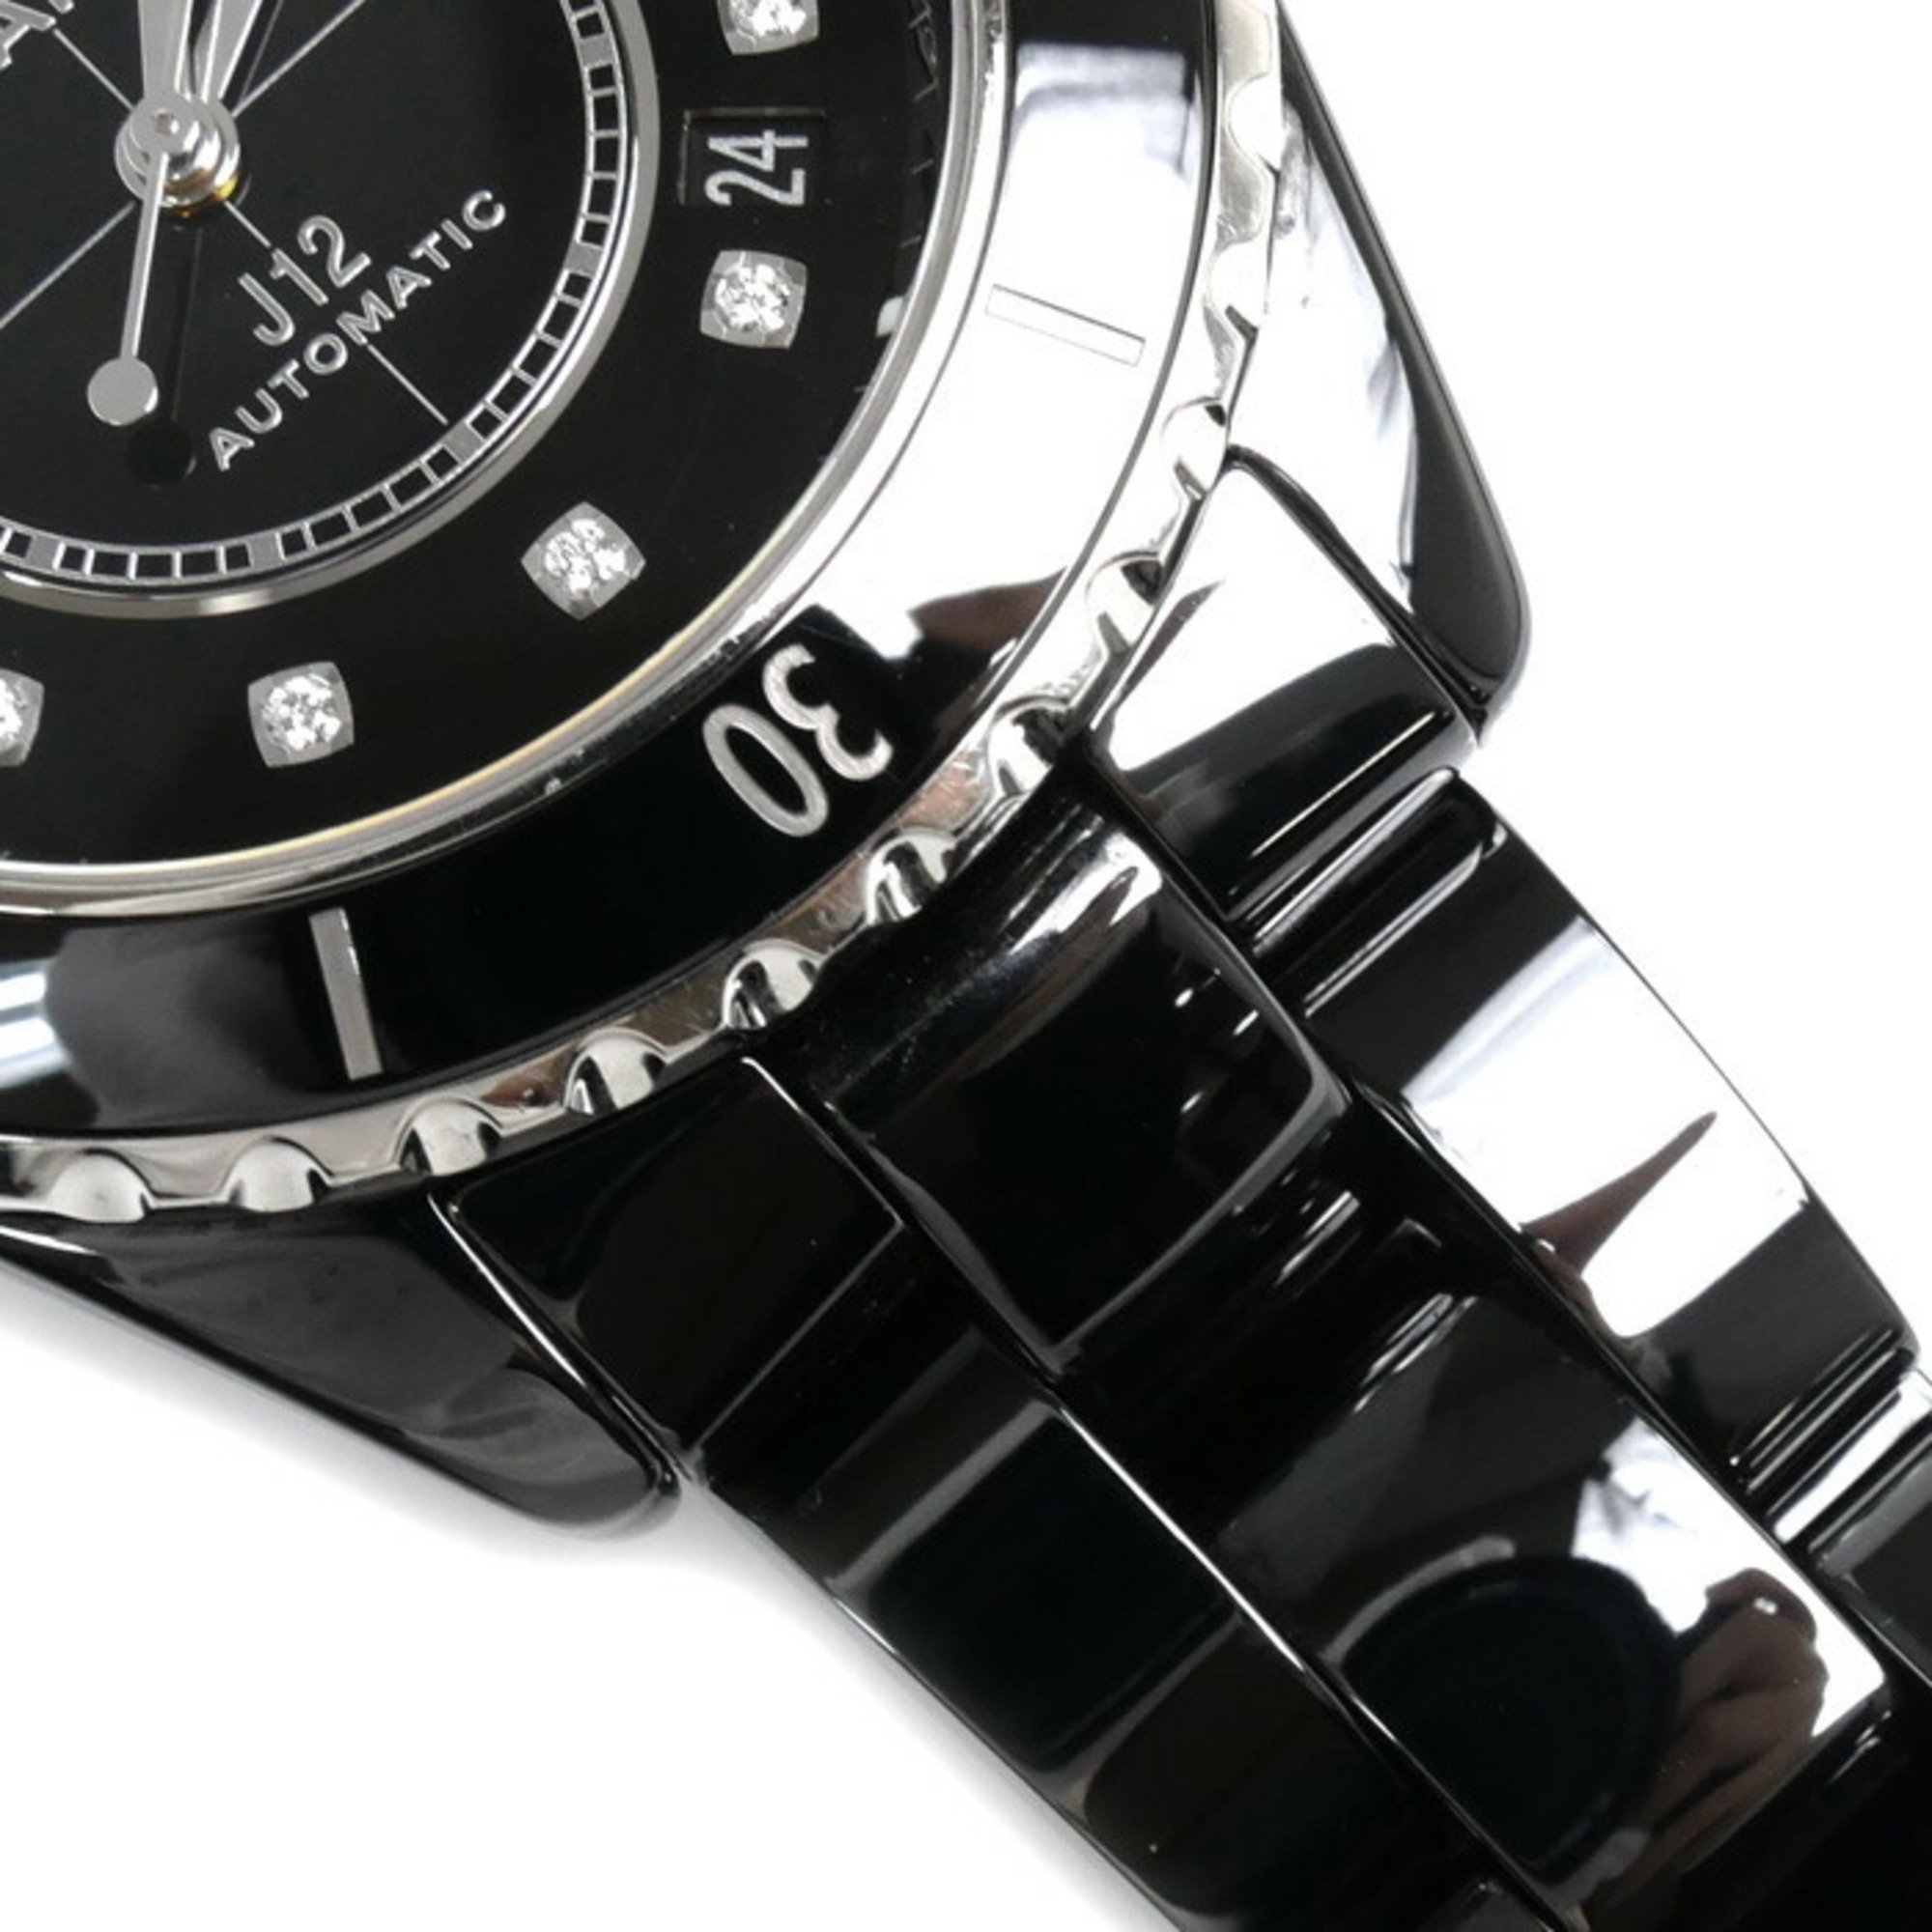 CHANEL J12 38mm 12PD Automatic Watch Black H5702 Men's